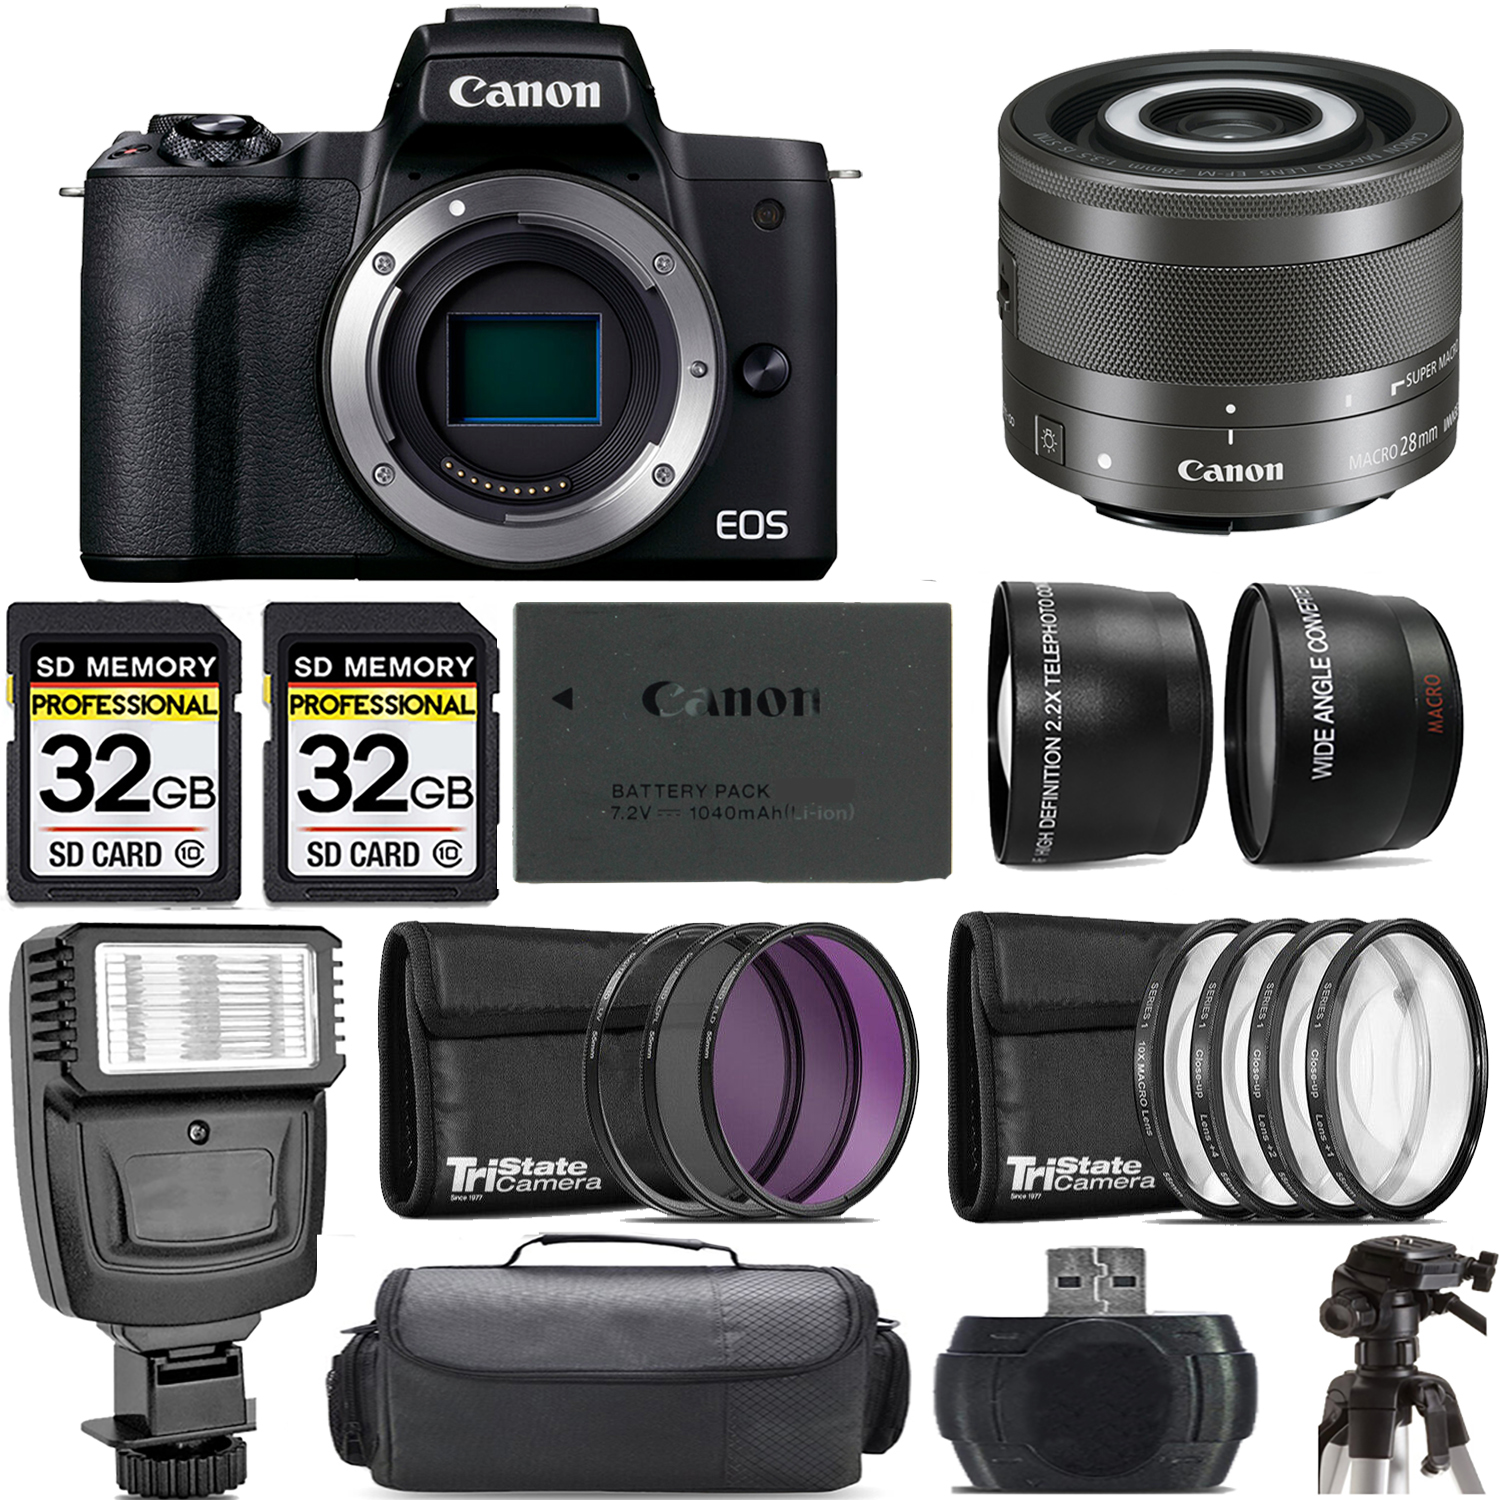 EOS EOS M50 Mark II Camera (Black) + 28mm f/3.5 Macro IS STM Lens + Flash - Kit *FREE SHIPPING*